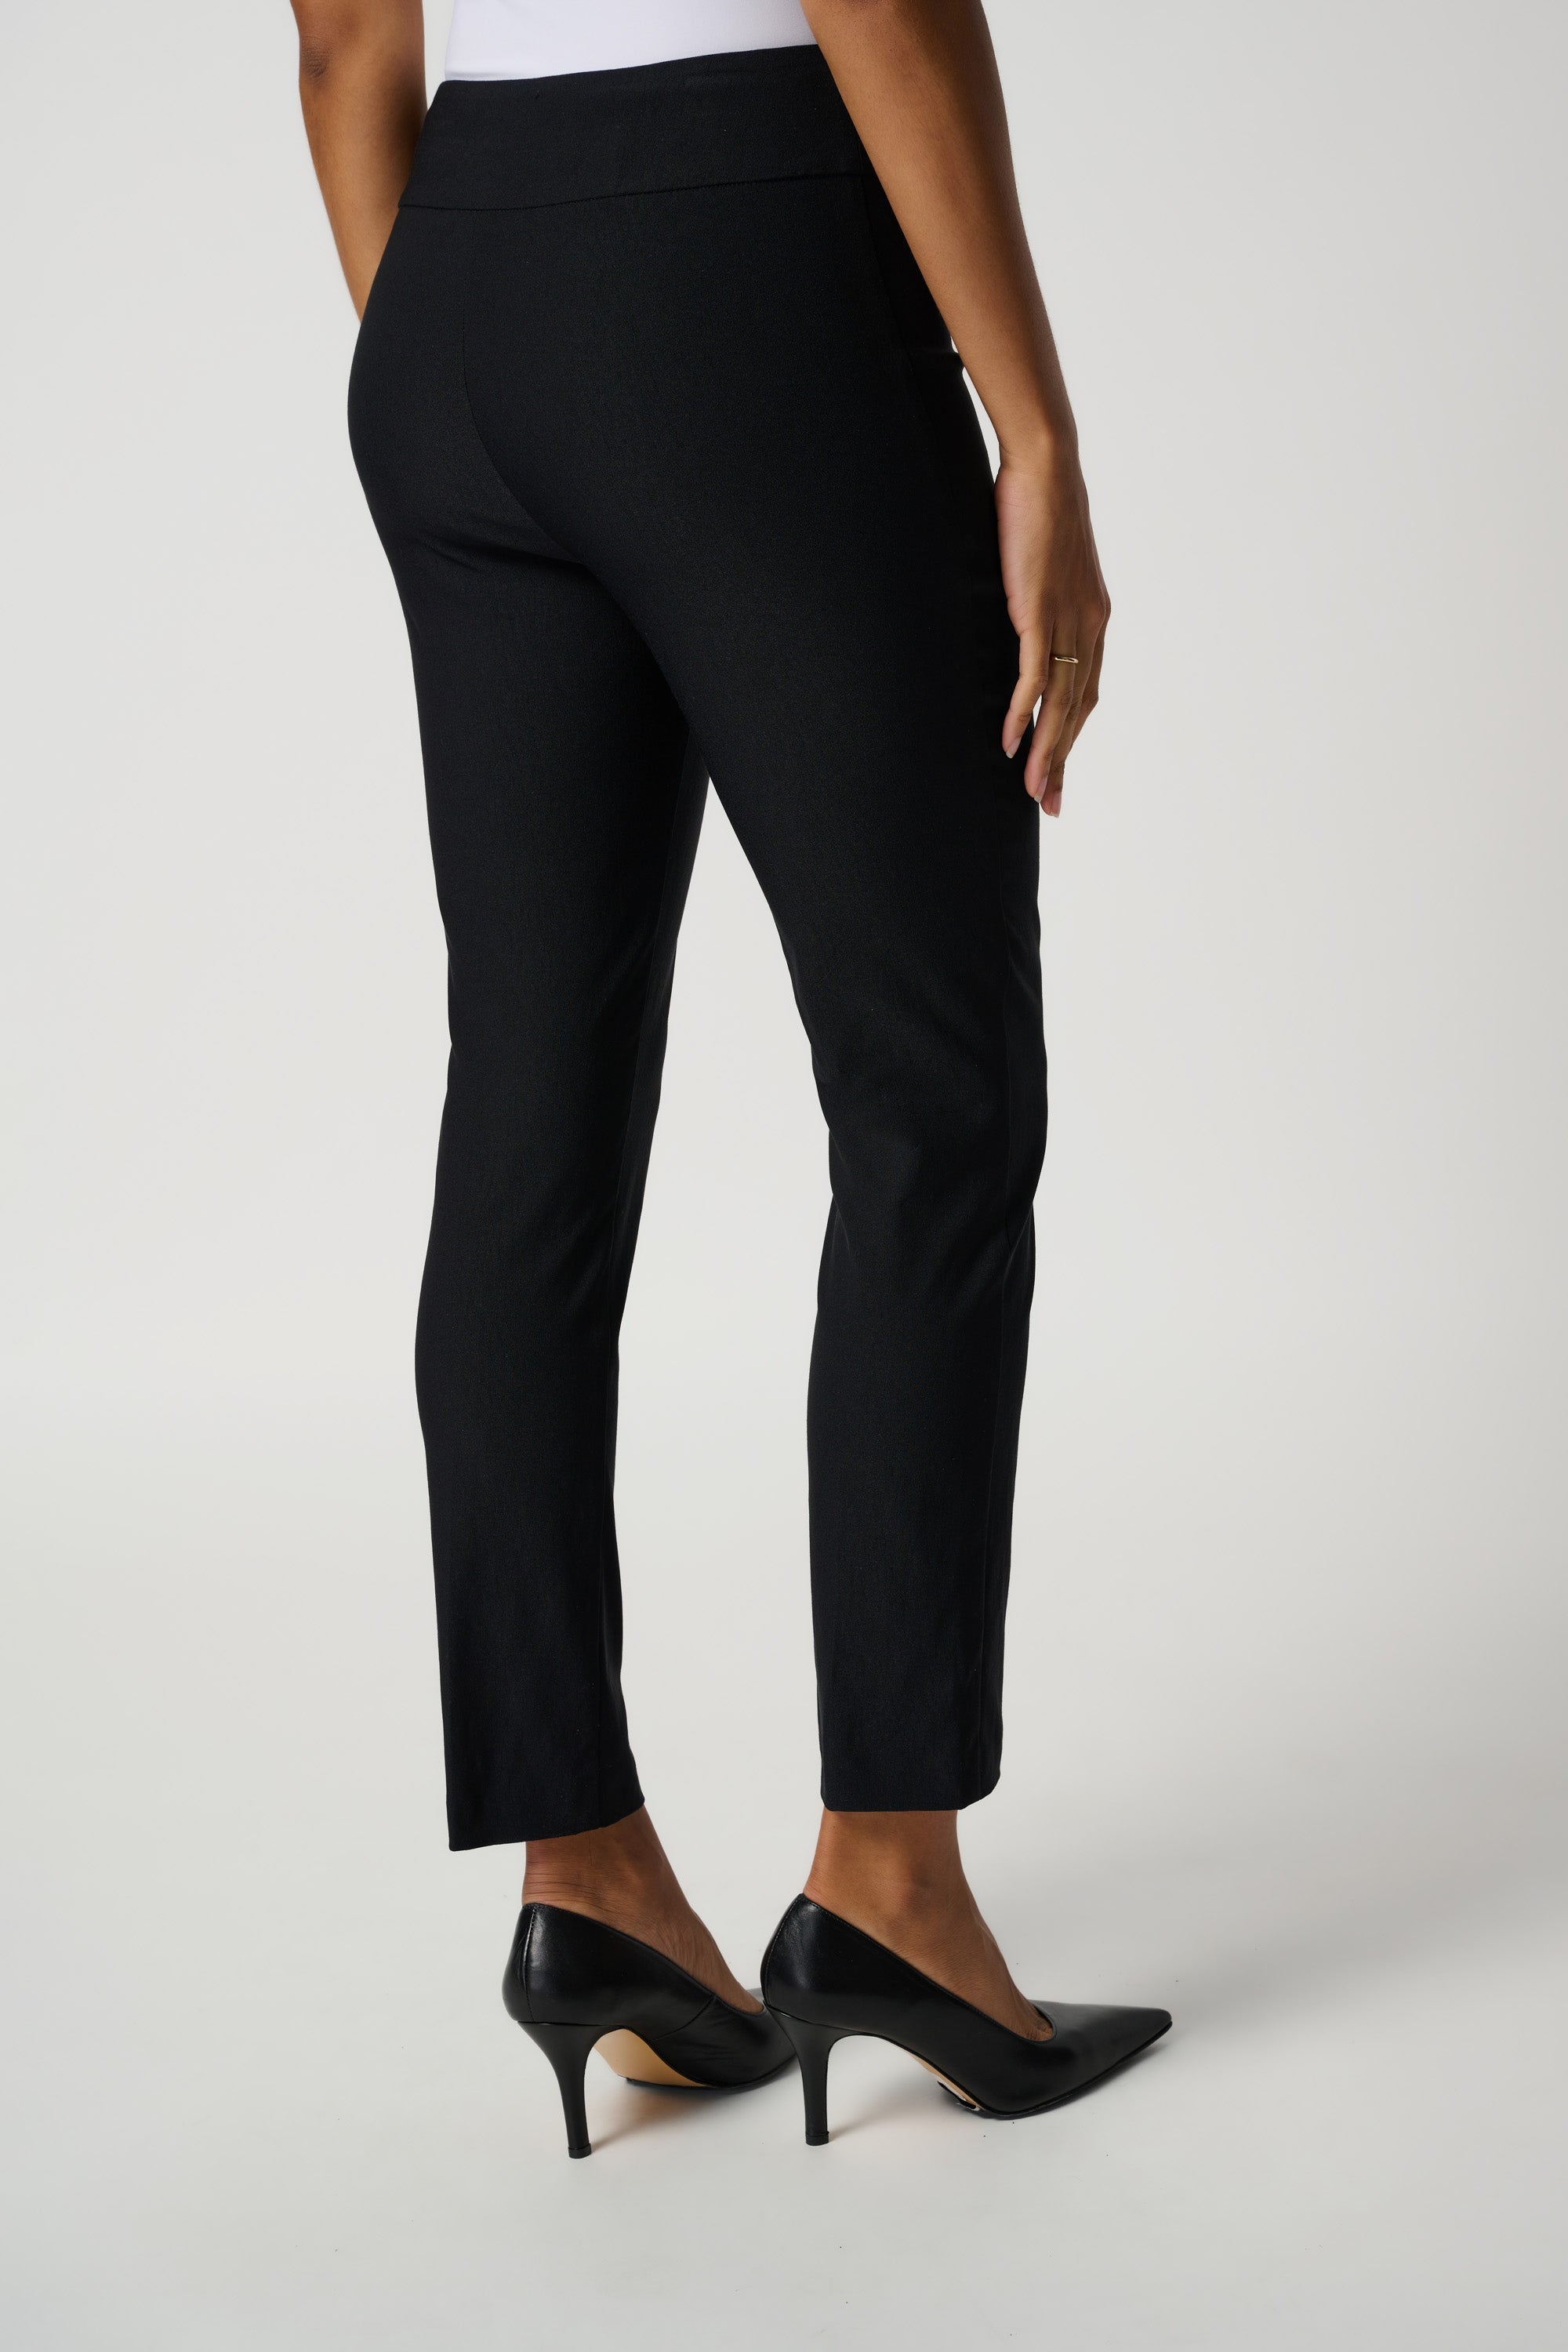 Joseph Ribkoff (201483NOS) Women's Classic Pull On Slim Pants in Black